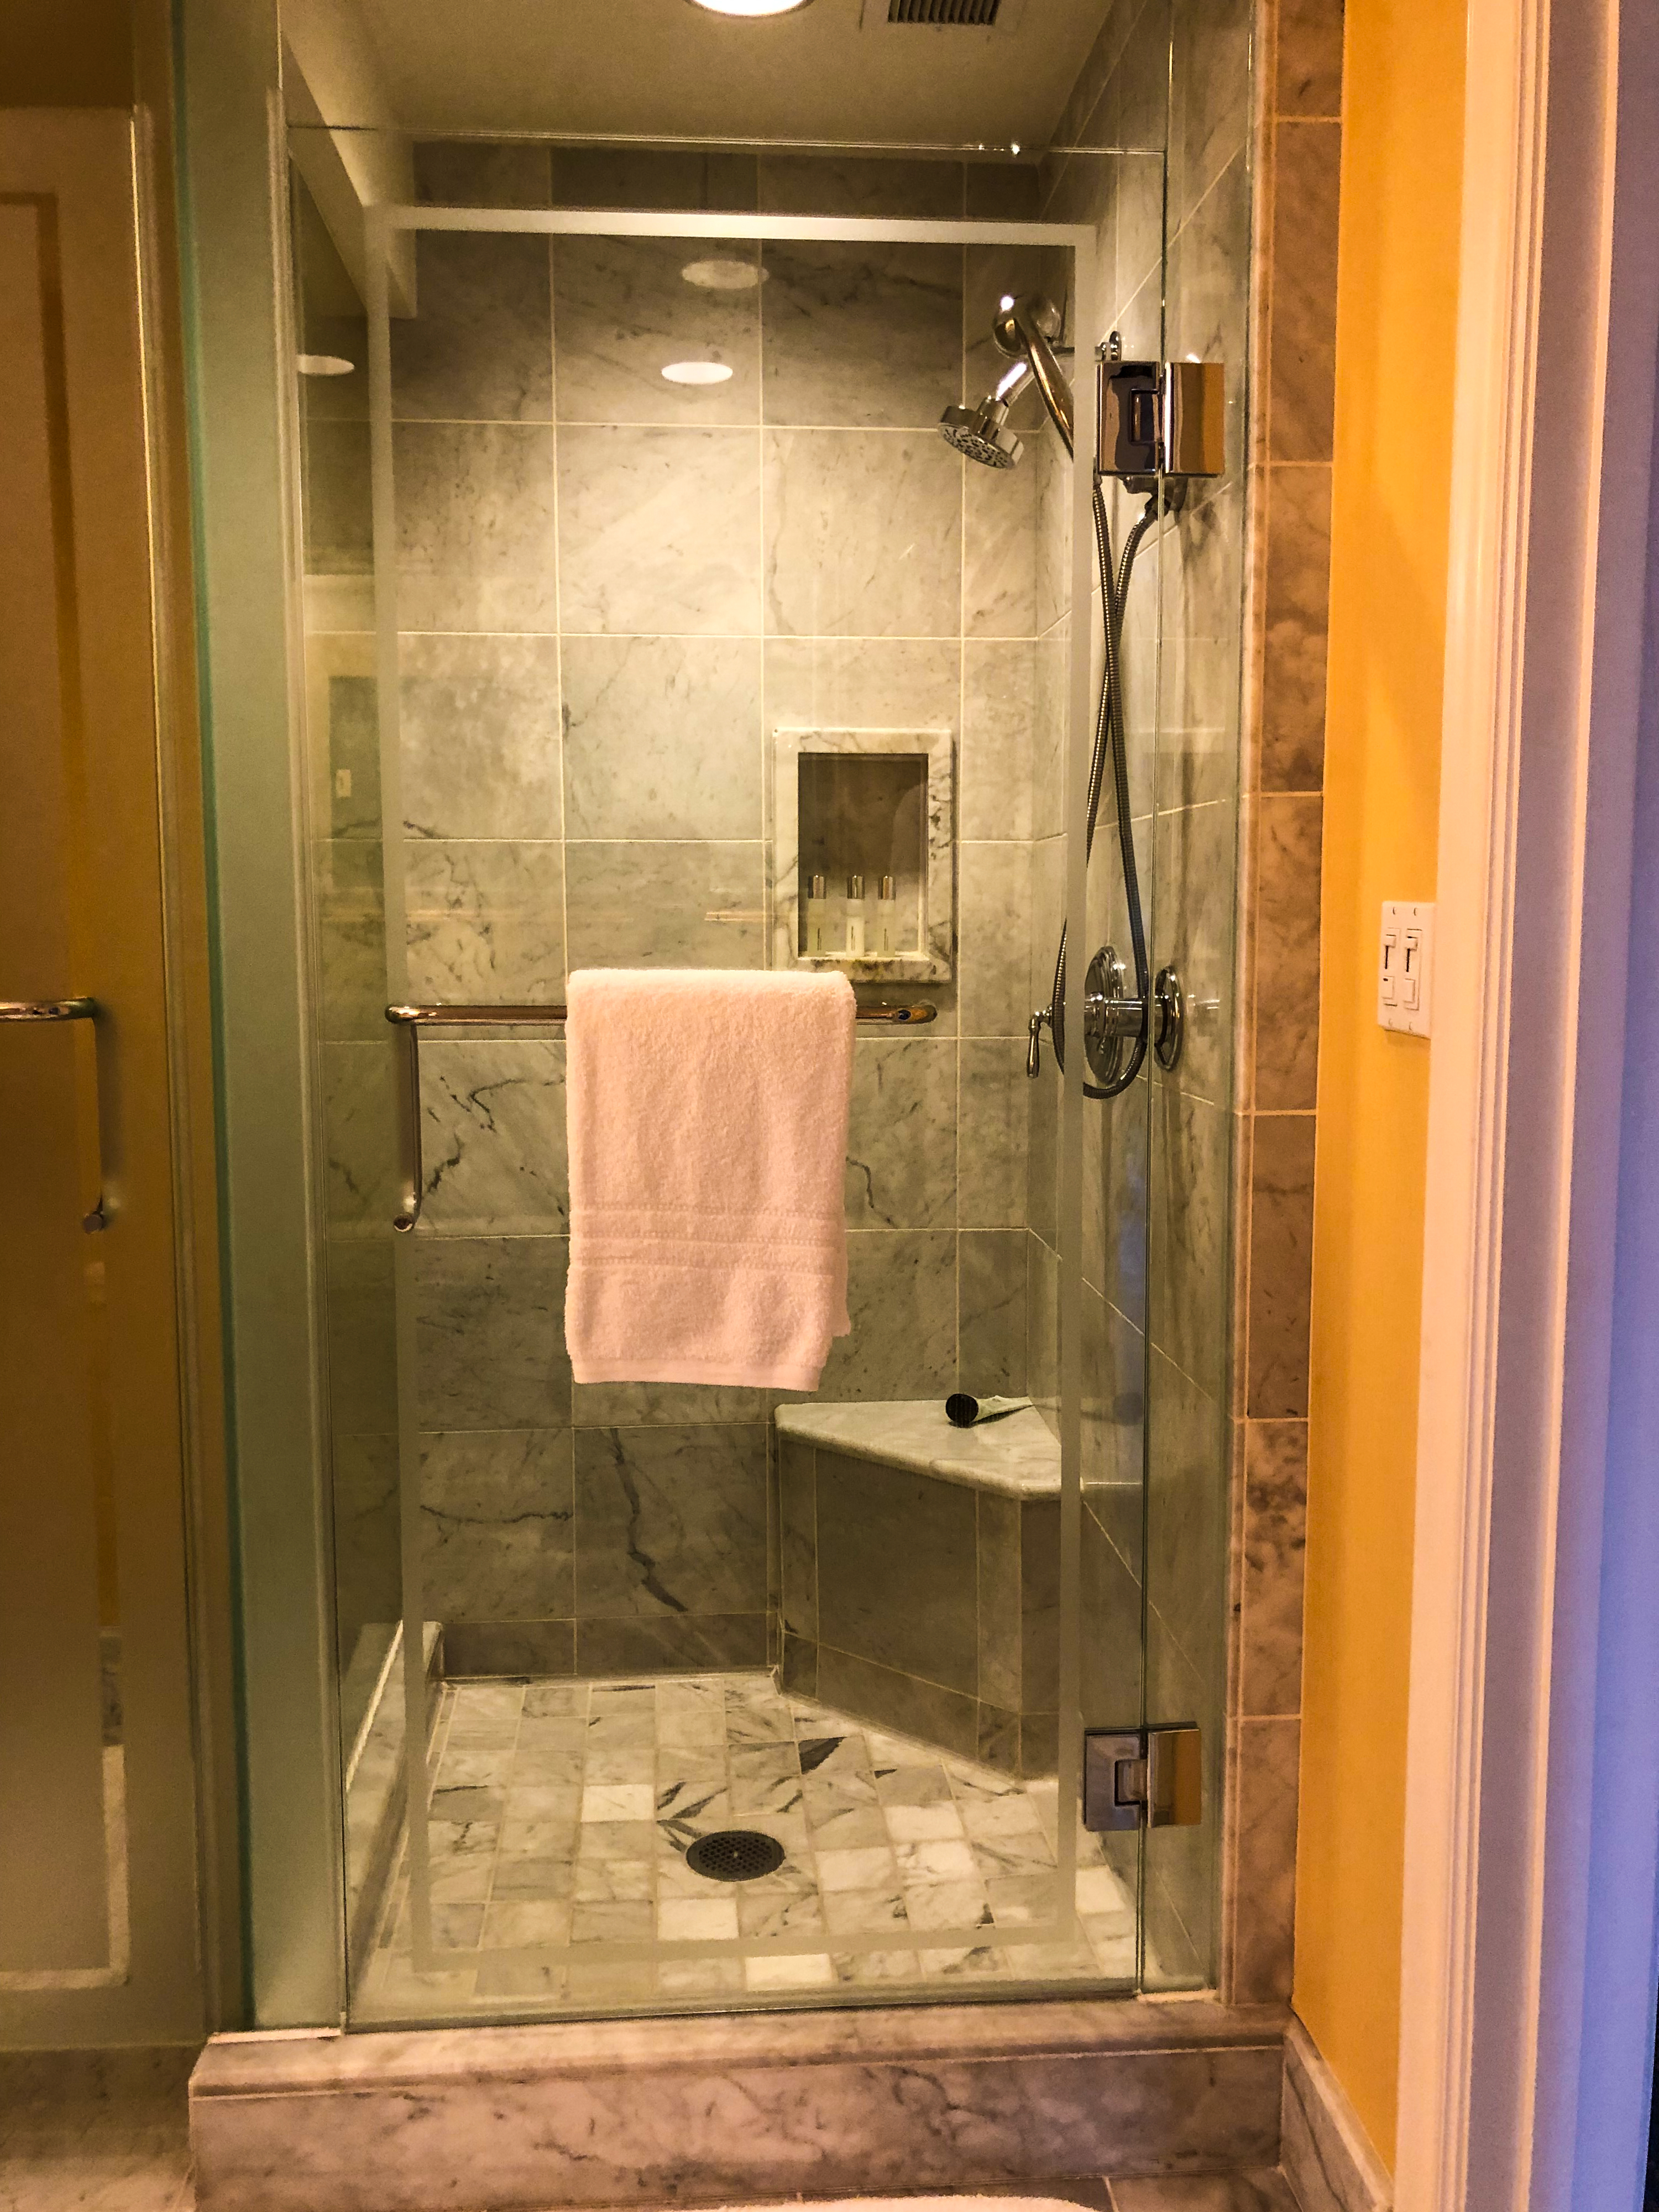 Four Seasons Hotel Westlake Village deluxe king room shower